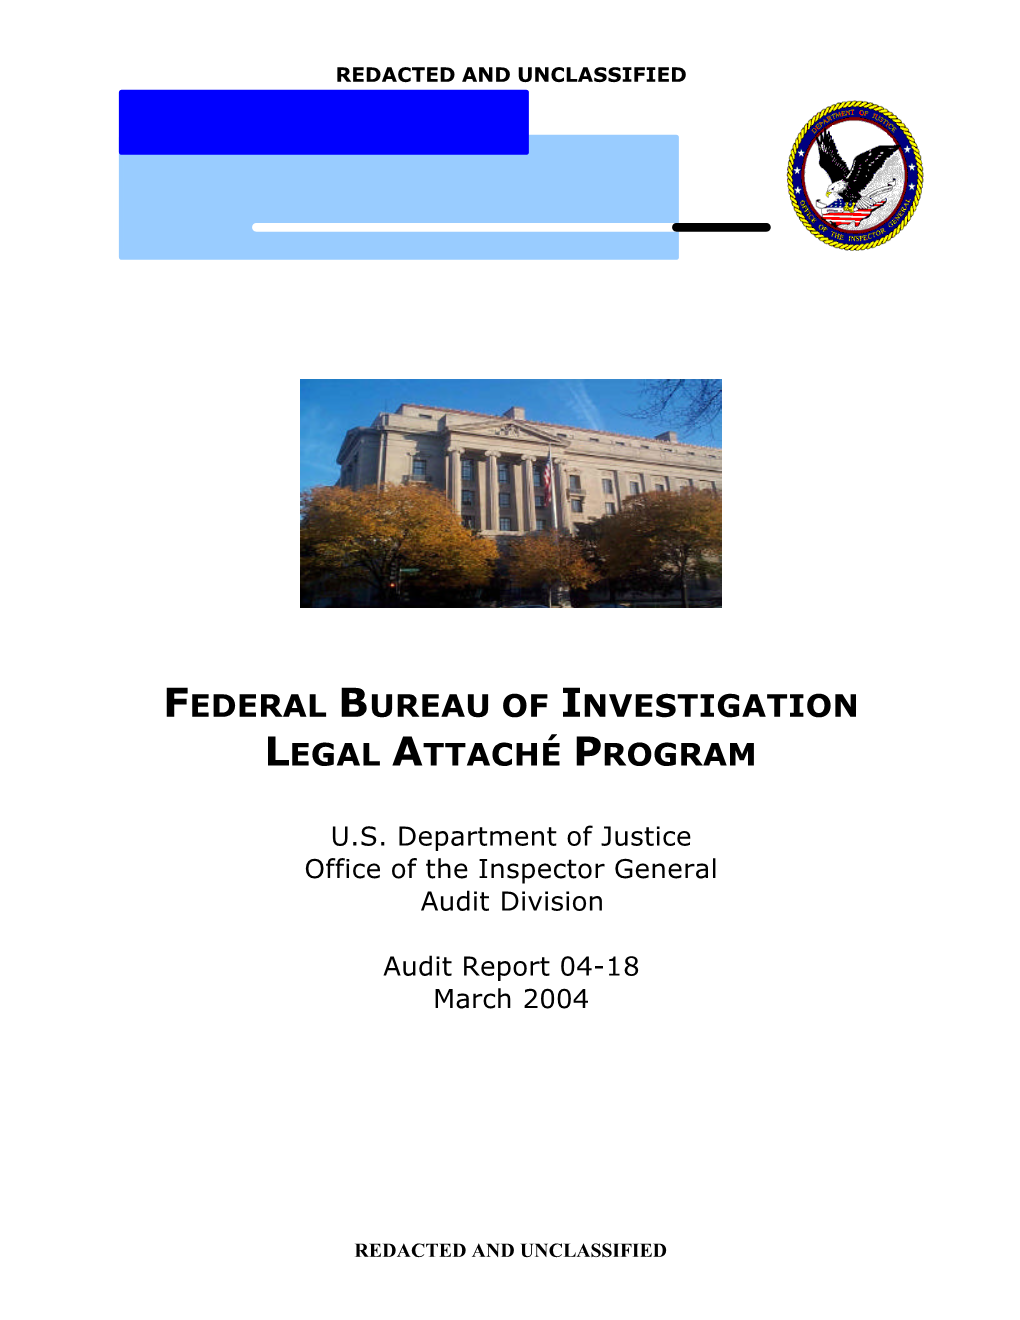 Federal Bureau of Investigation Legal Attaché Program